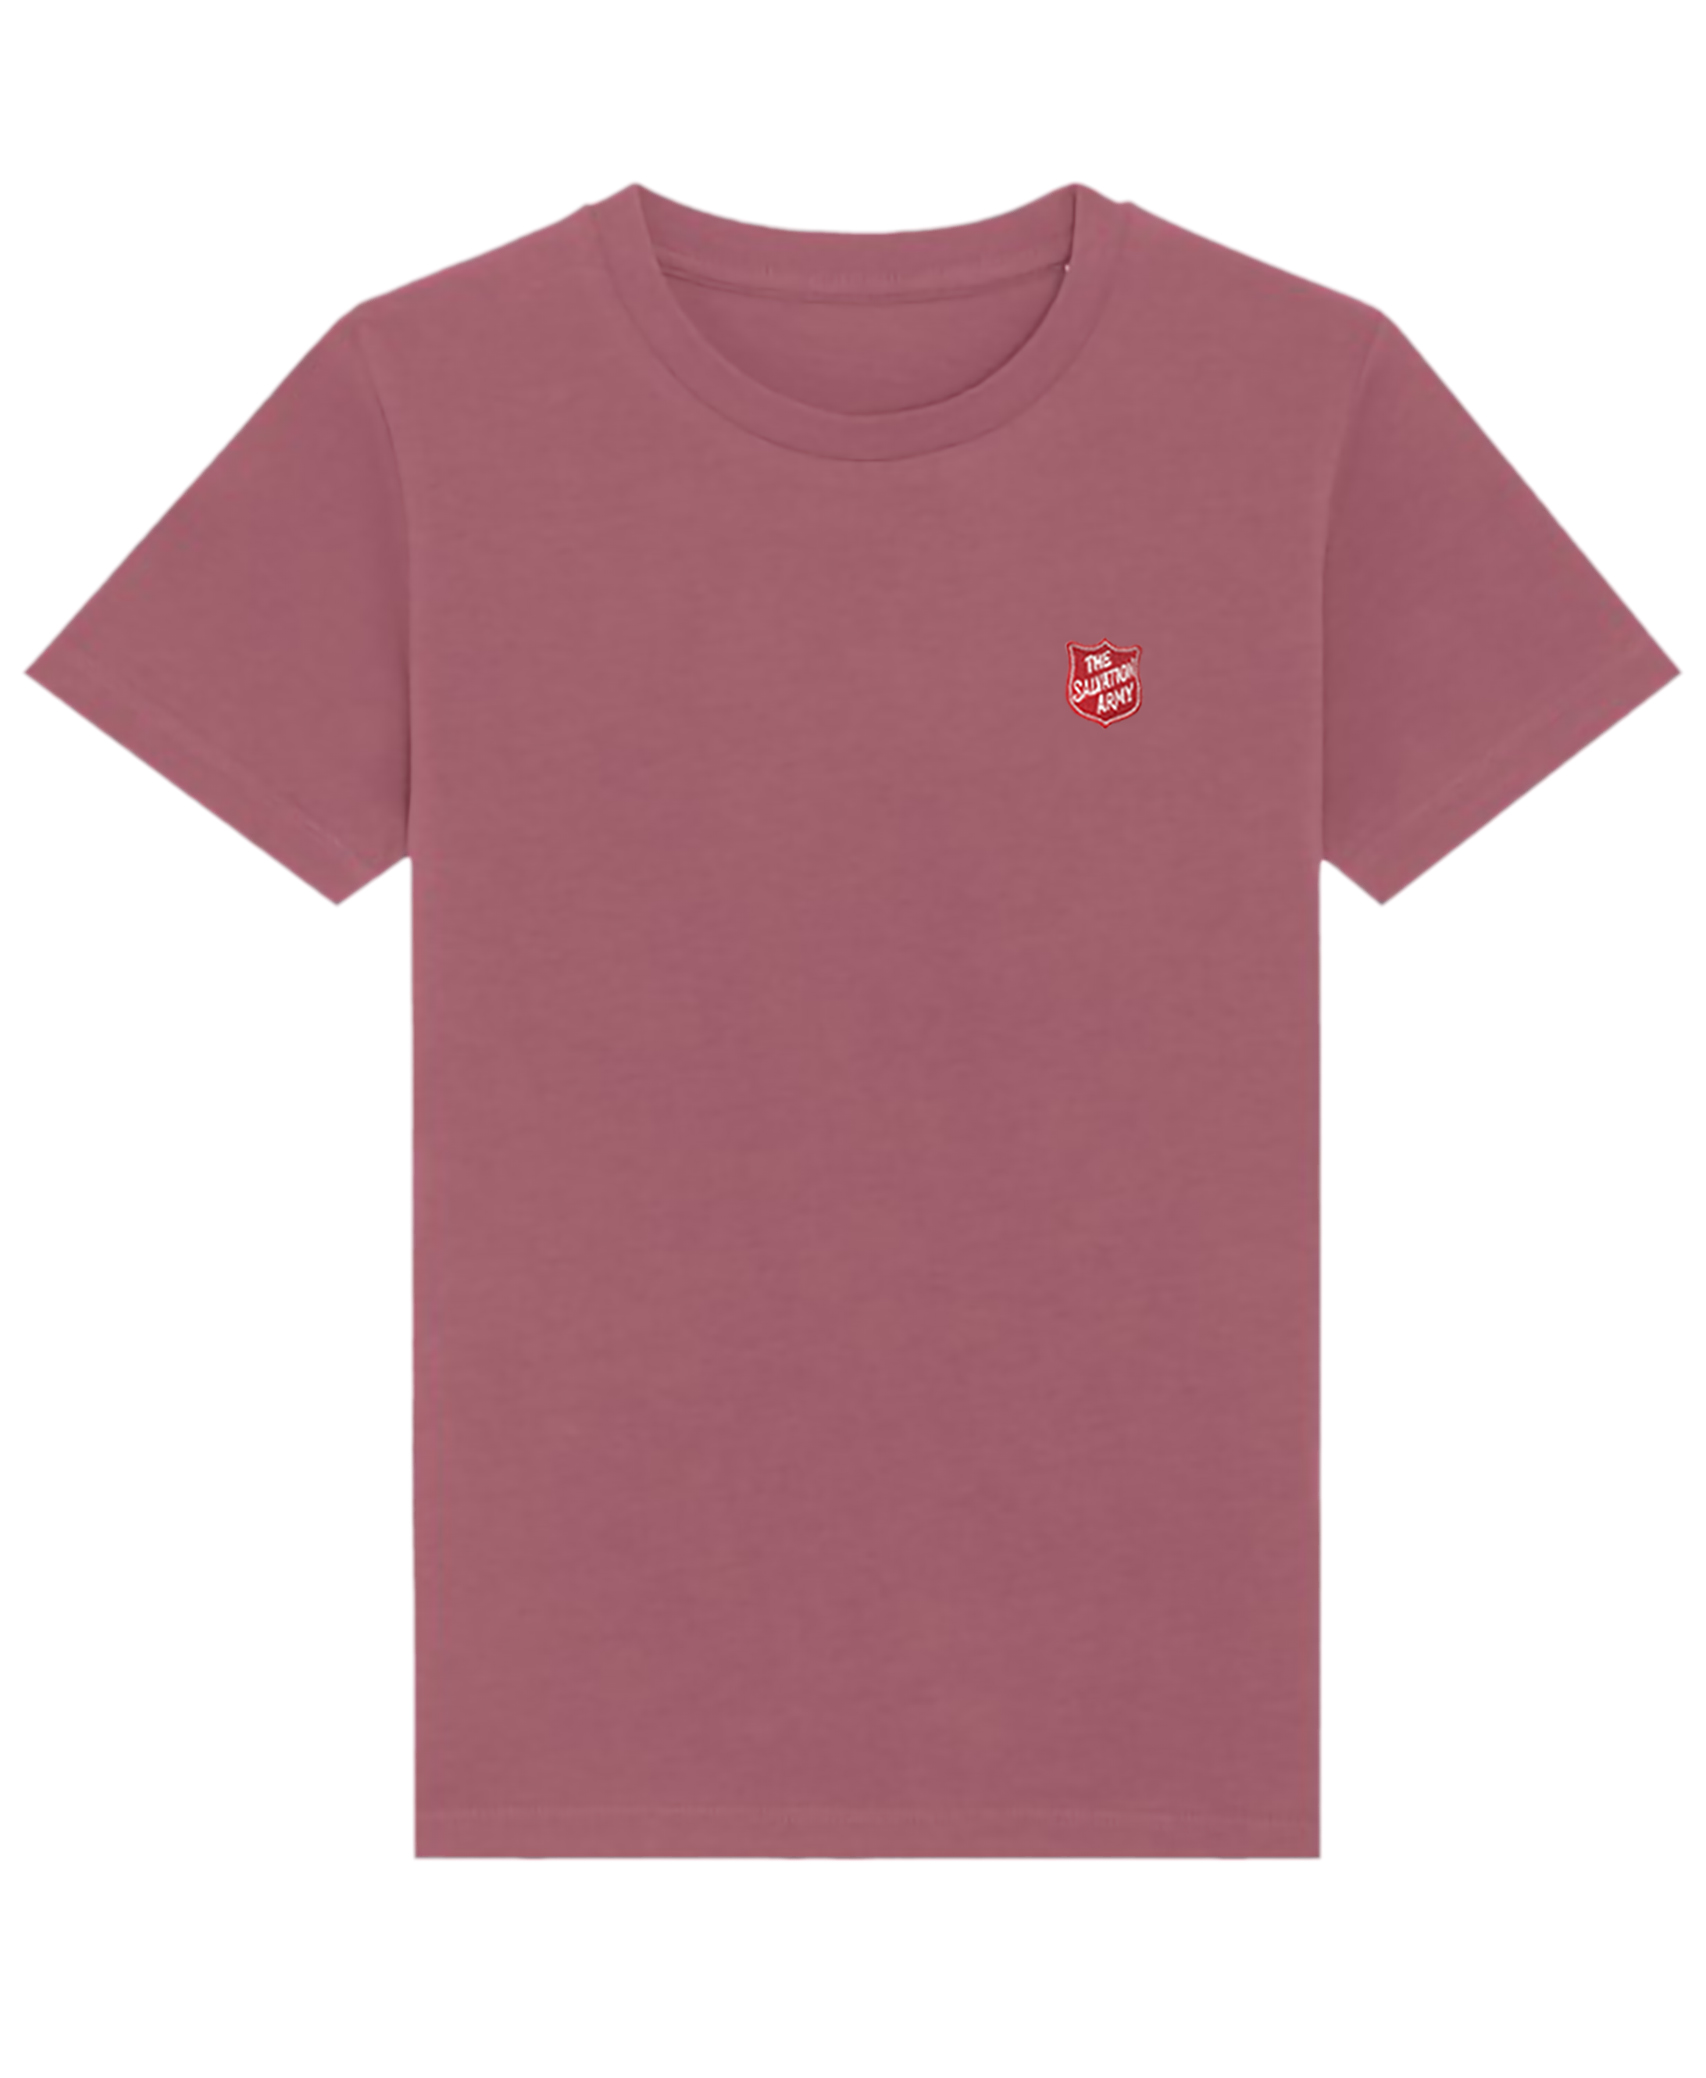 Sustainable Children's T-shirt in Hib Rose